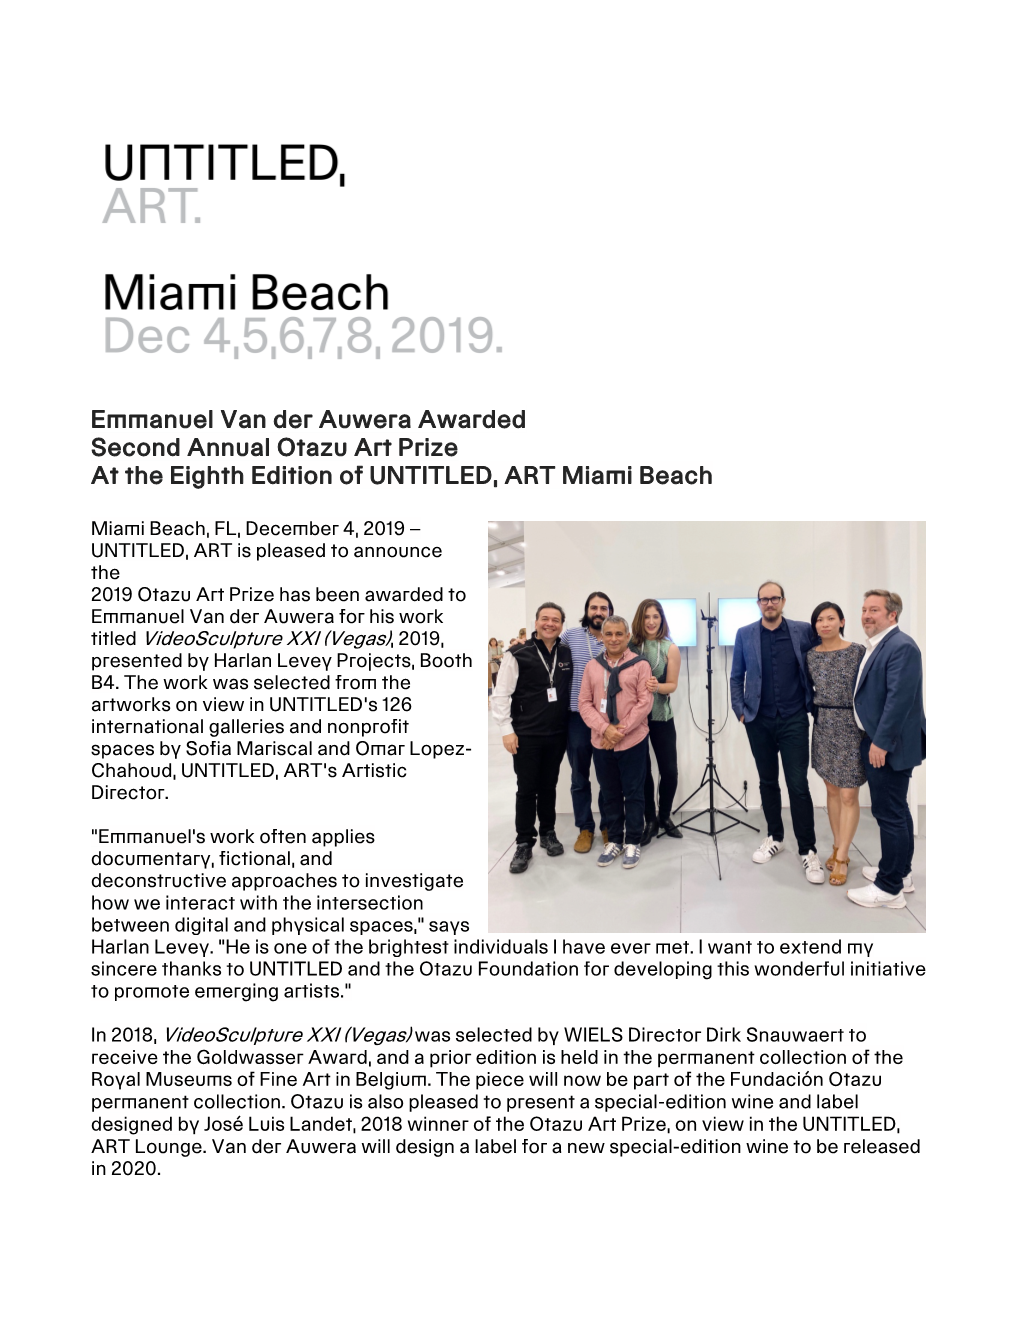 Emmanuel Van Der Auwera Awarded Second Annual Otazu Art Prize at the Eighth Edition of UNTITLED, ART Miami Beach